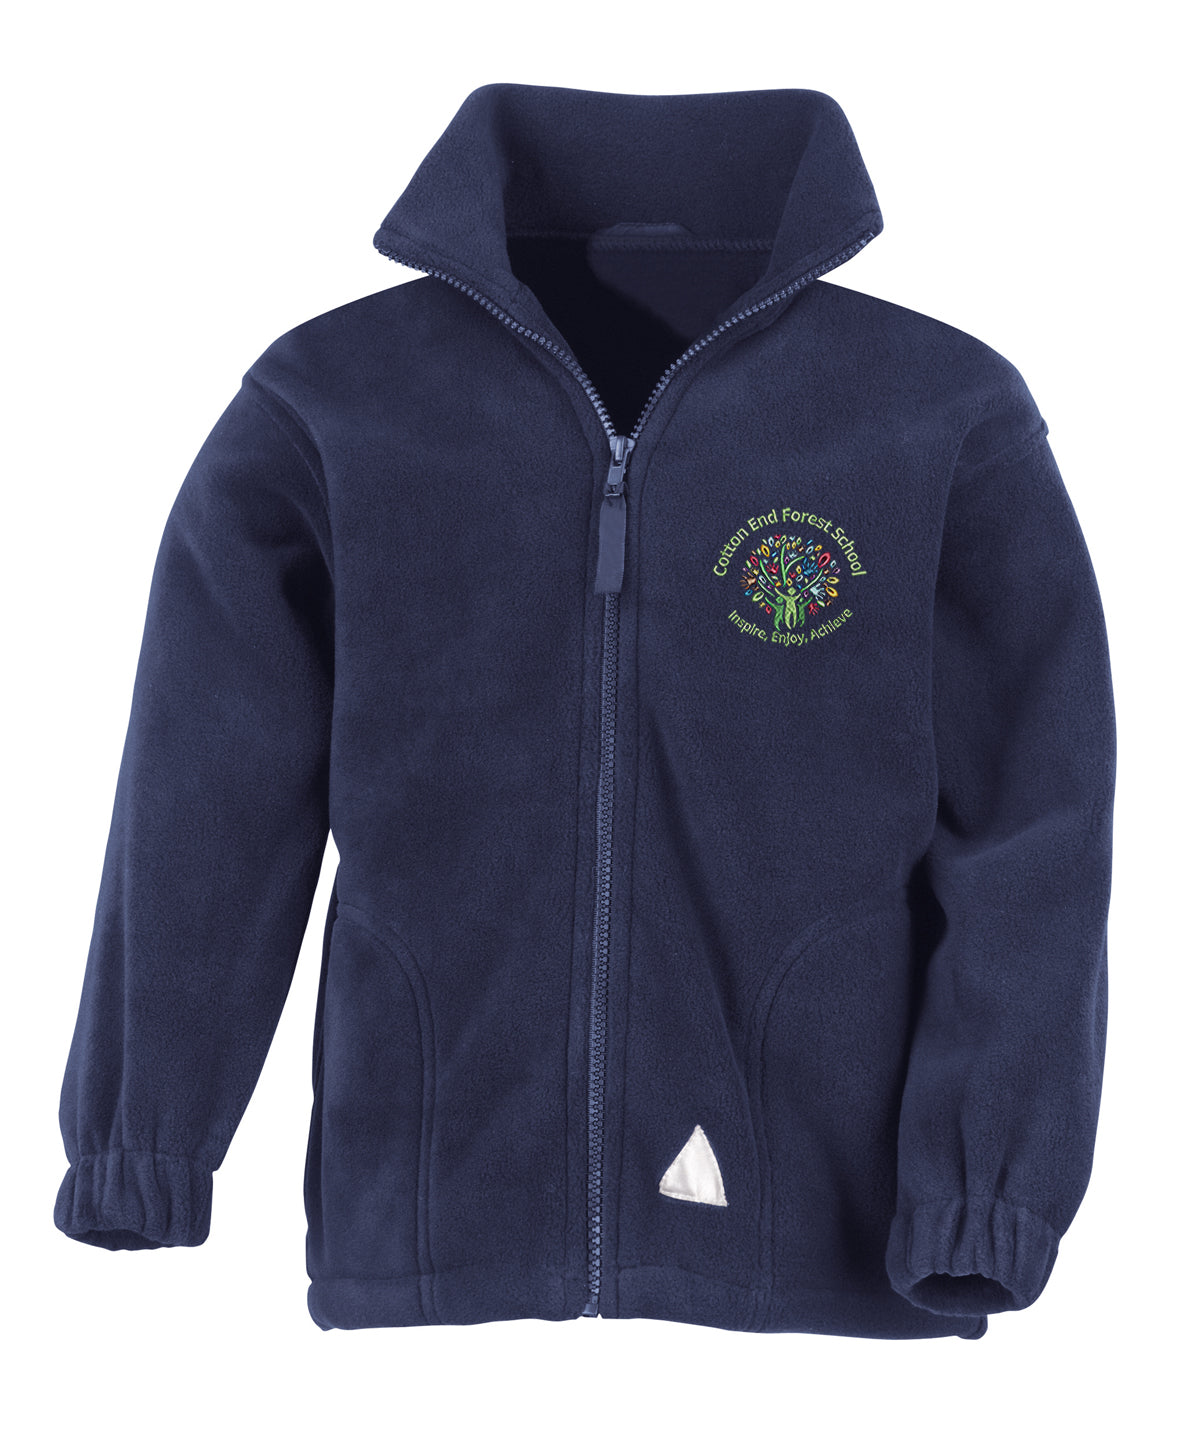 Cotton End Forest School - Navy Fleece - School Uniform Shop